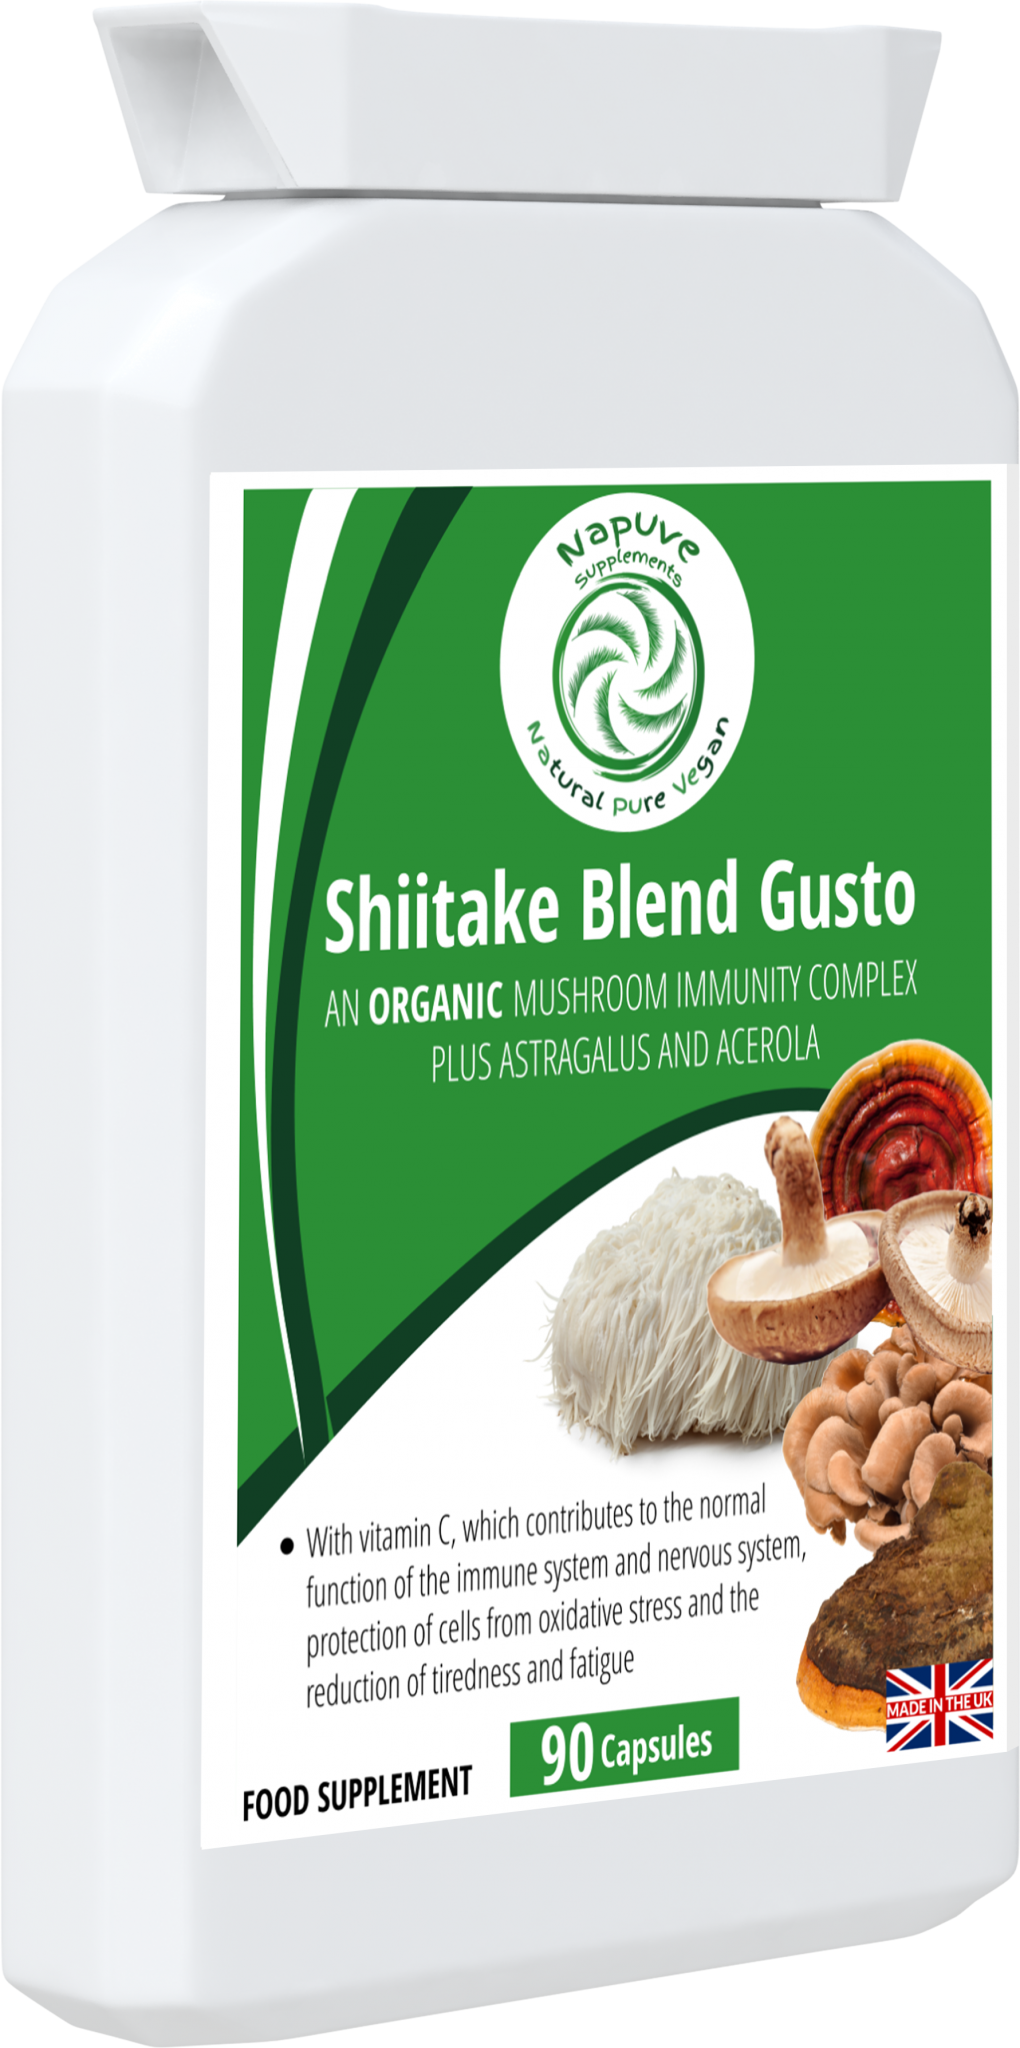 Shiitake Blend Gusto With Shiitake Mushroom Extract